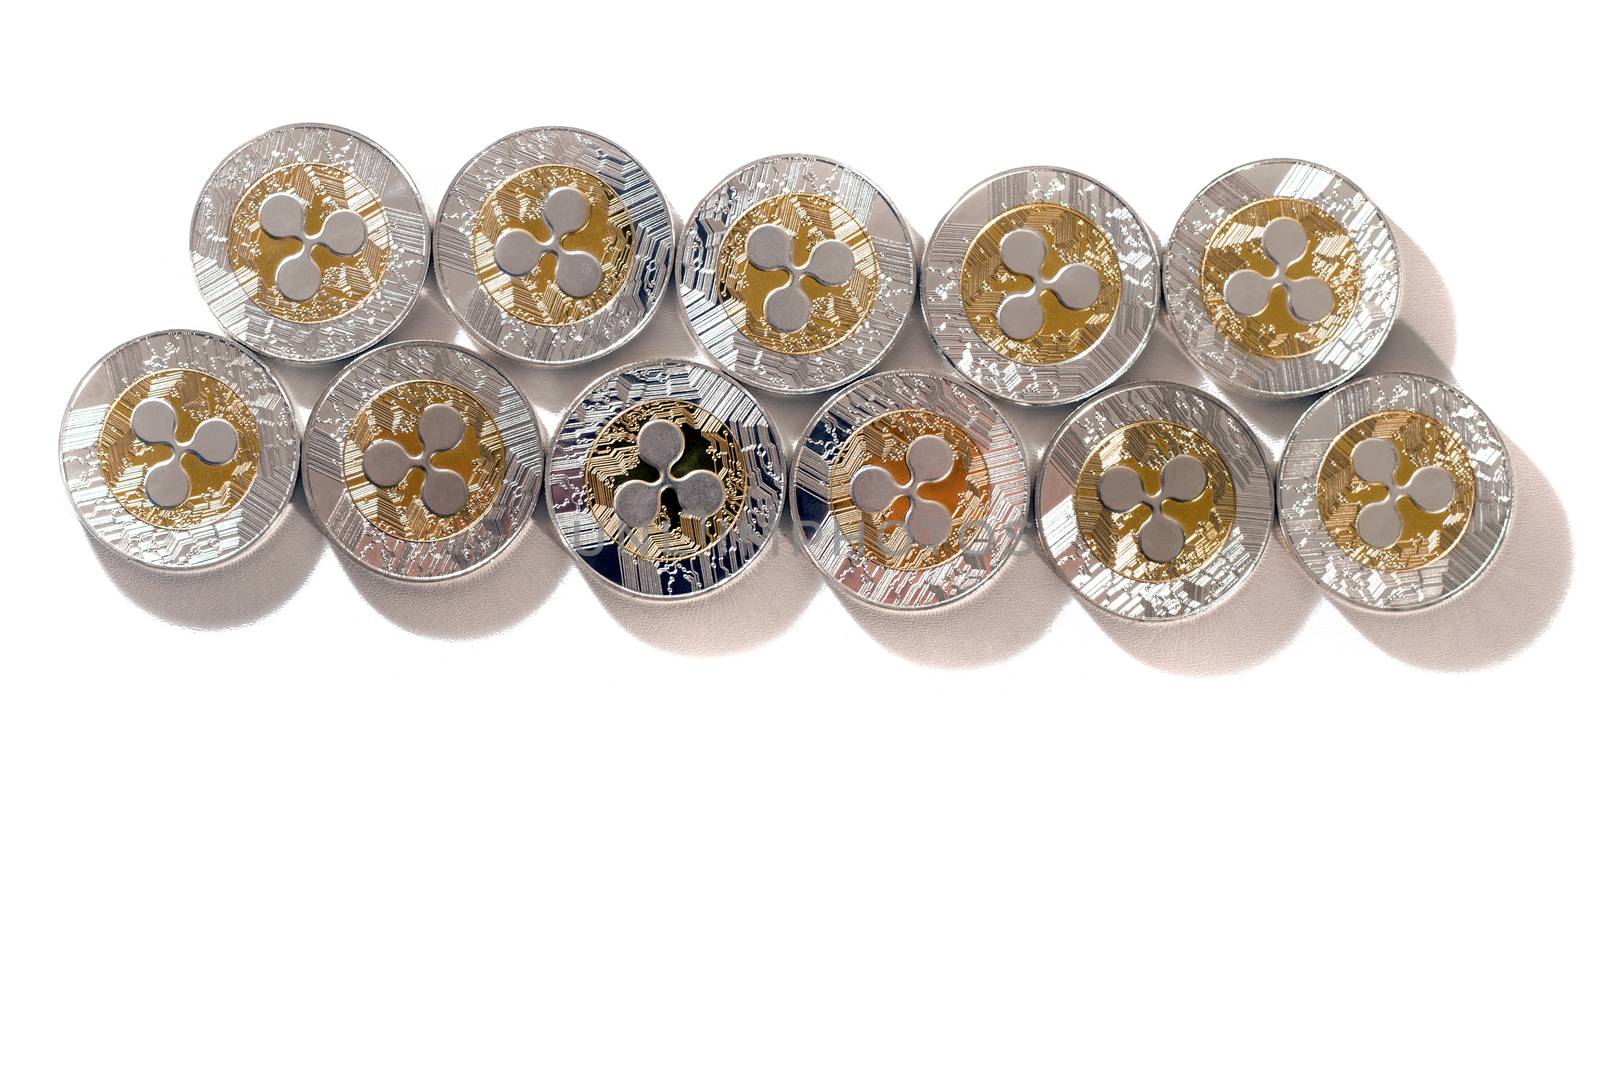 Shiny ripple coins by membio